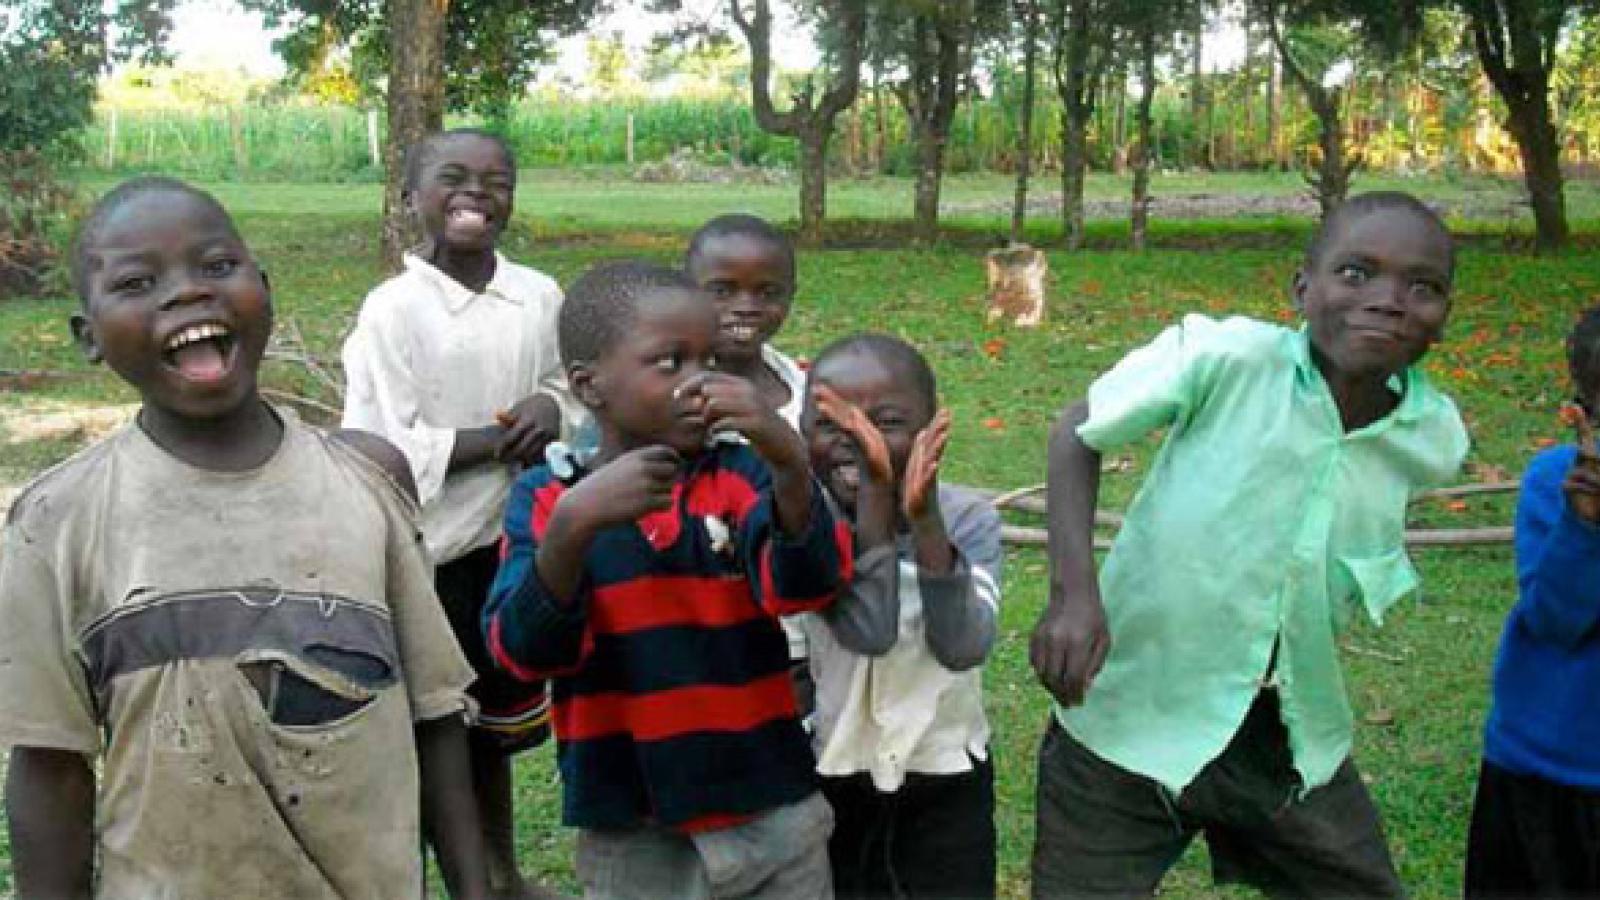 Children in Kenya.